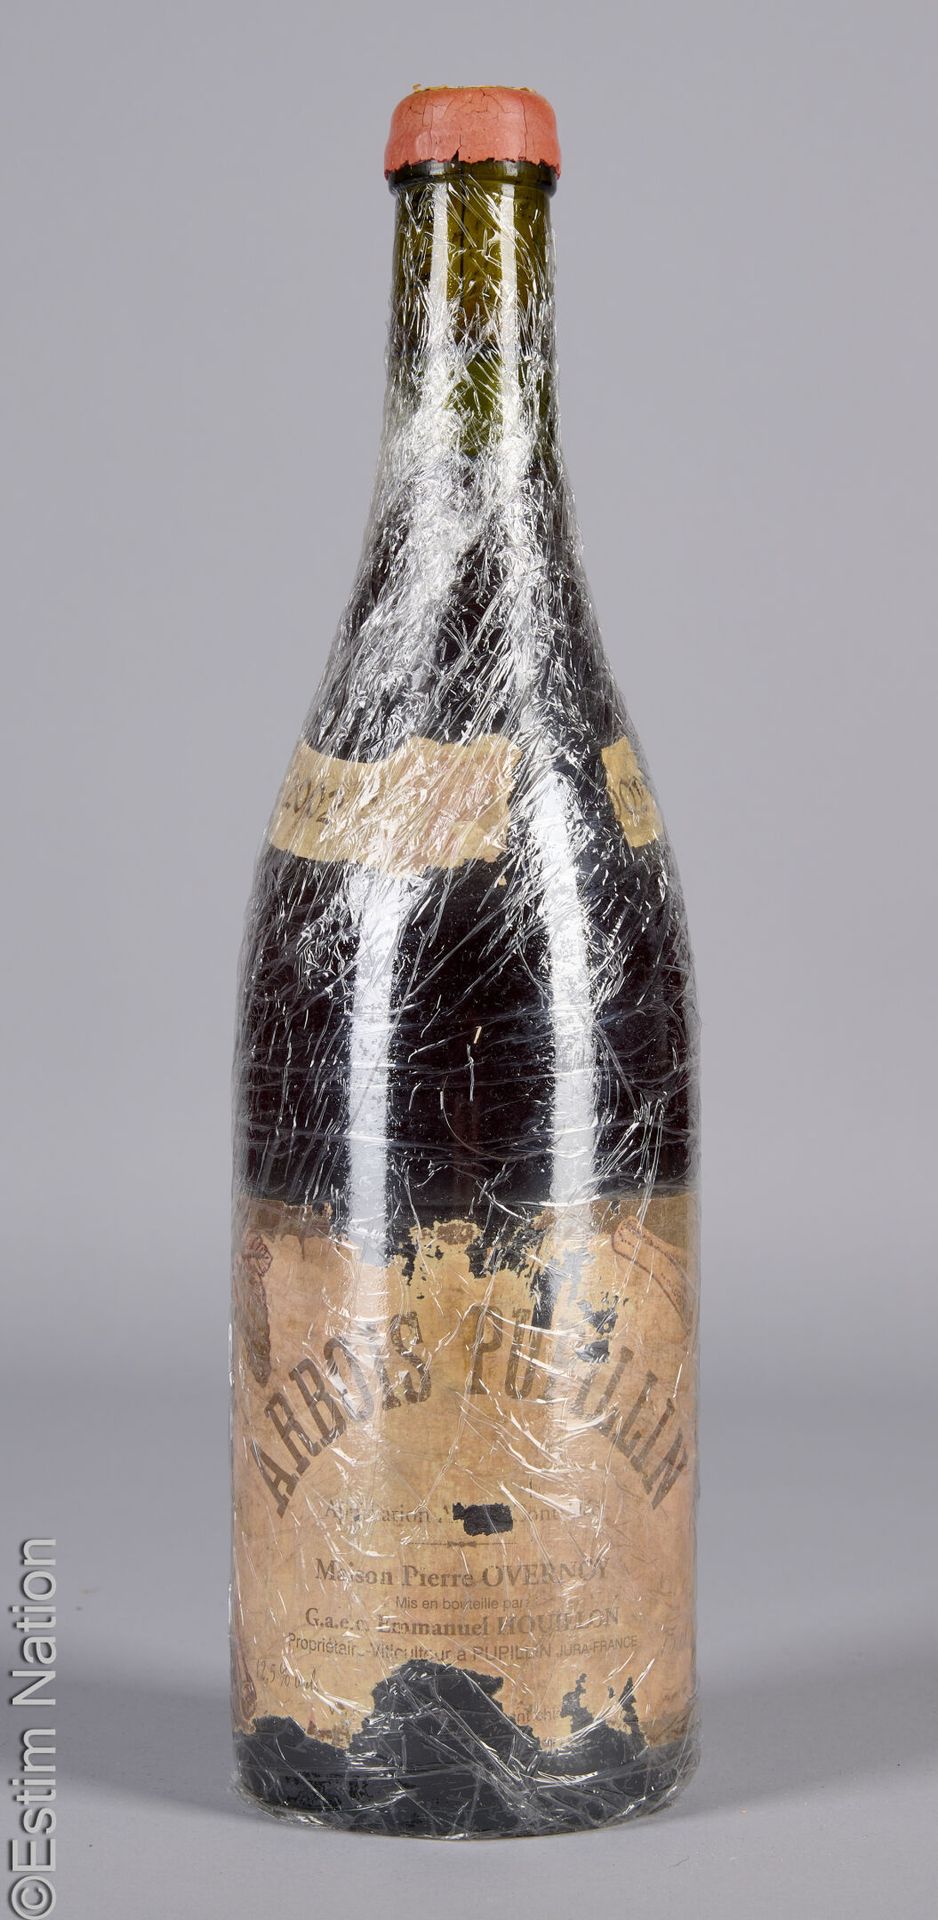 JURA 1 bouteille ARBOIS PUPILLIN 2002 Mauson Pierre Overnoy
(N. Lb, E. Ta, td, m&hellip;